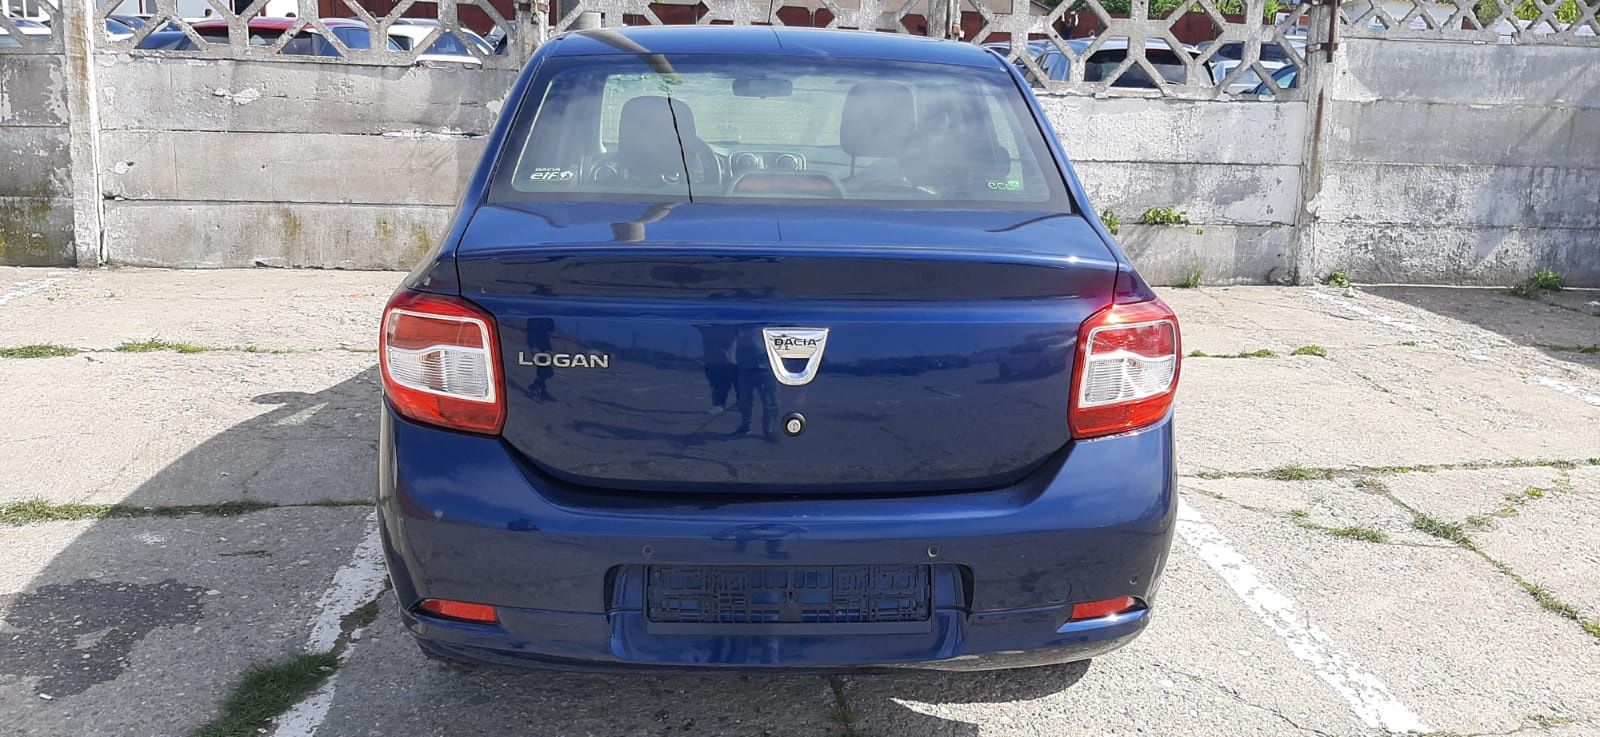 Dacia logan prestige